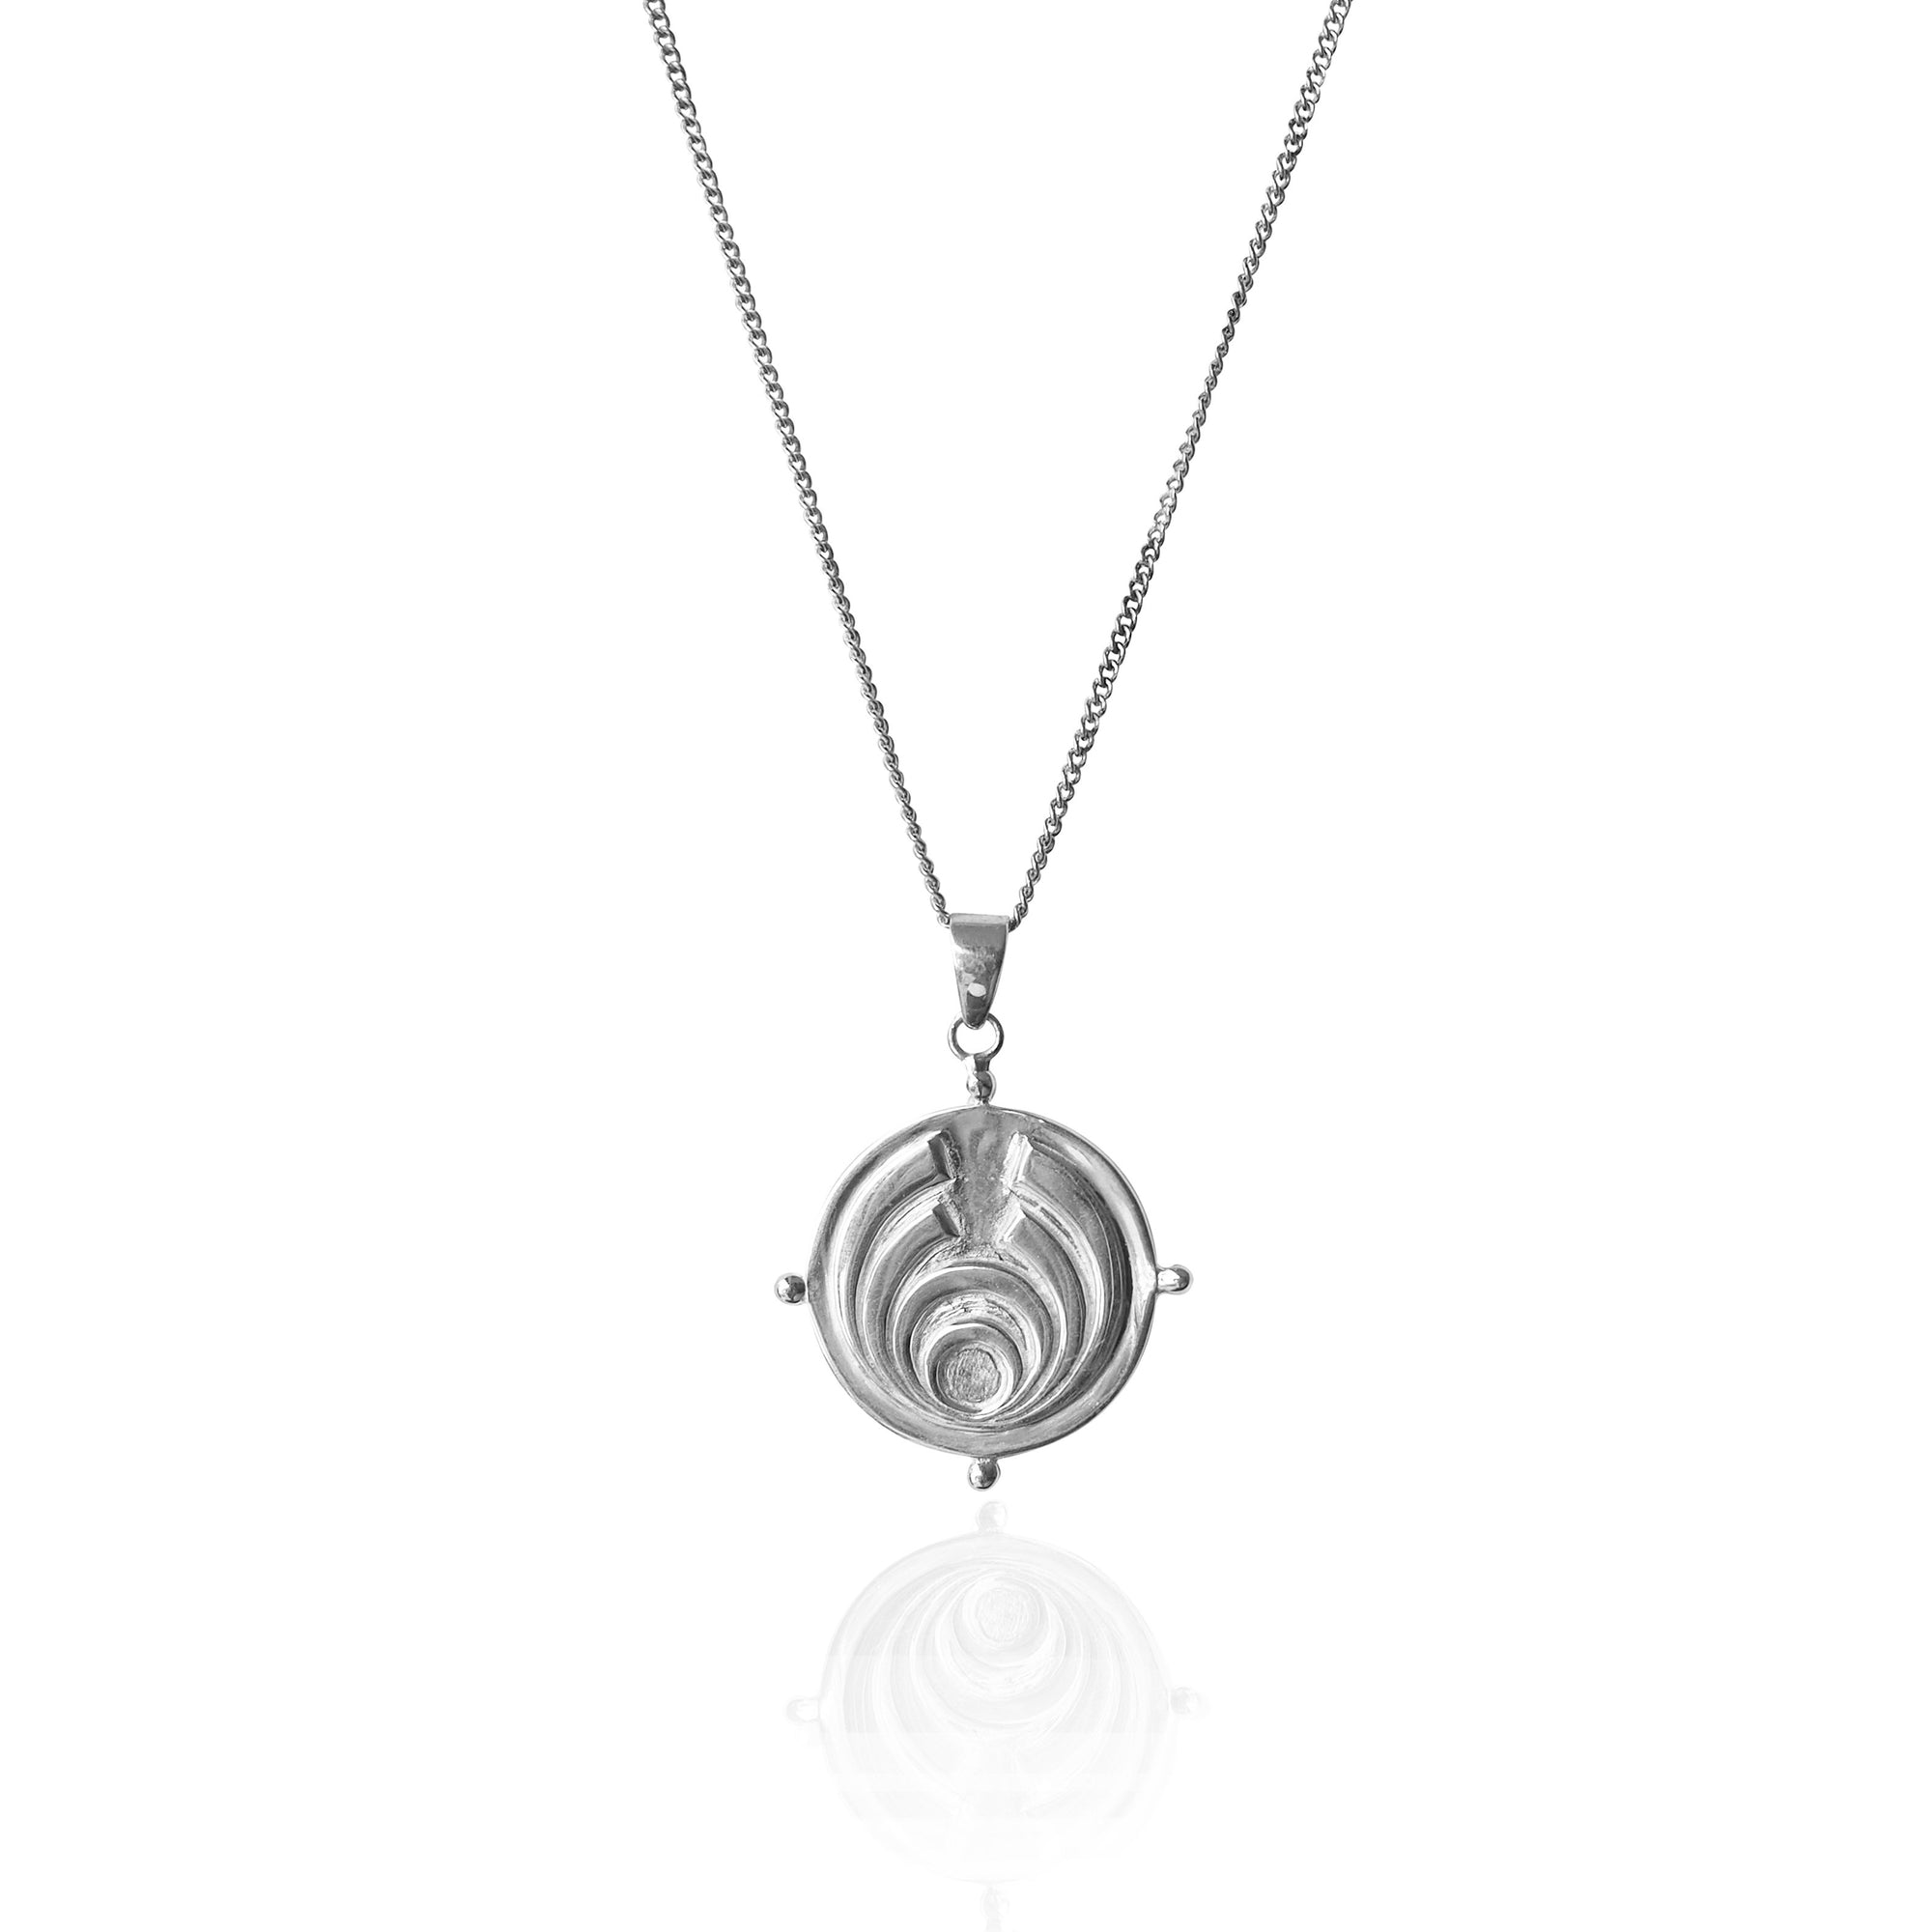 Luna & Rose Accessories - Sterling Silver Necklaces - Luna & Rose Jewellery